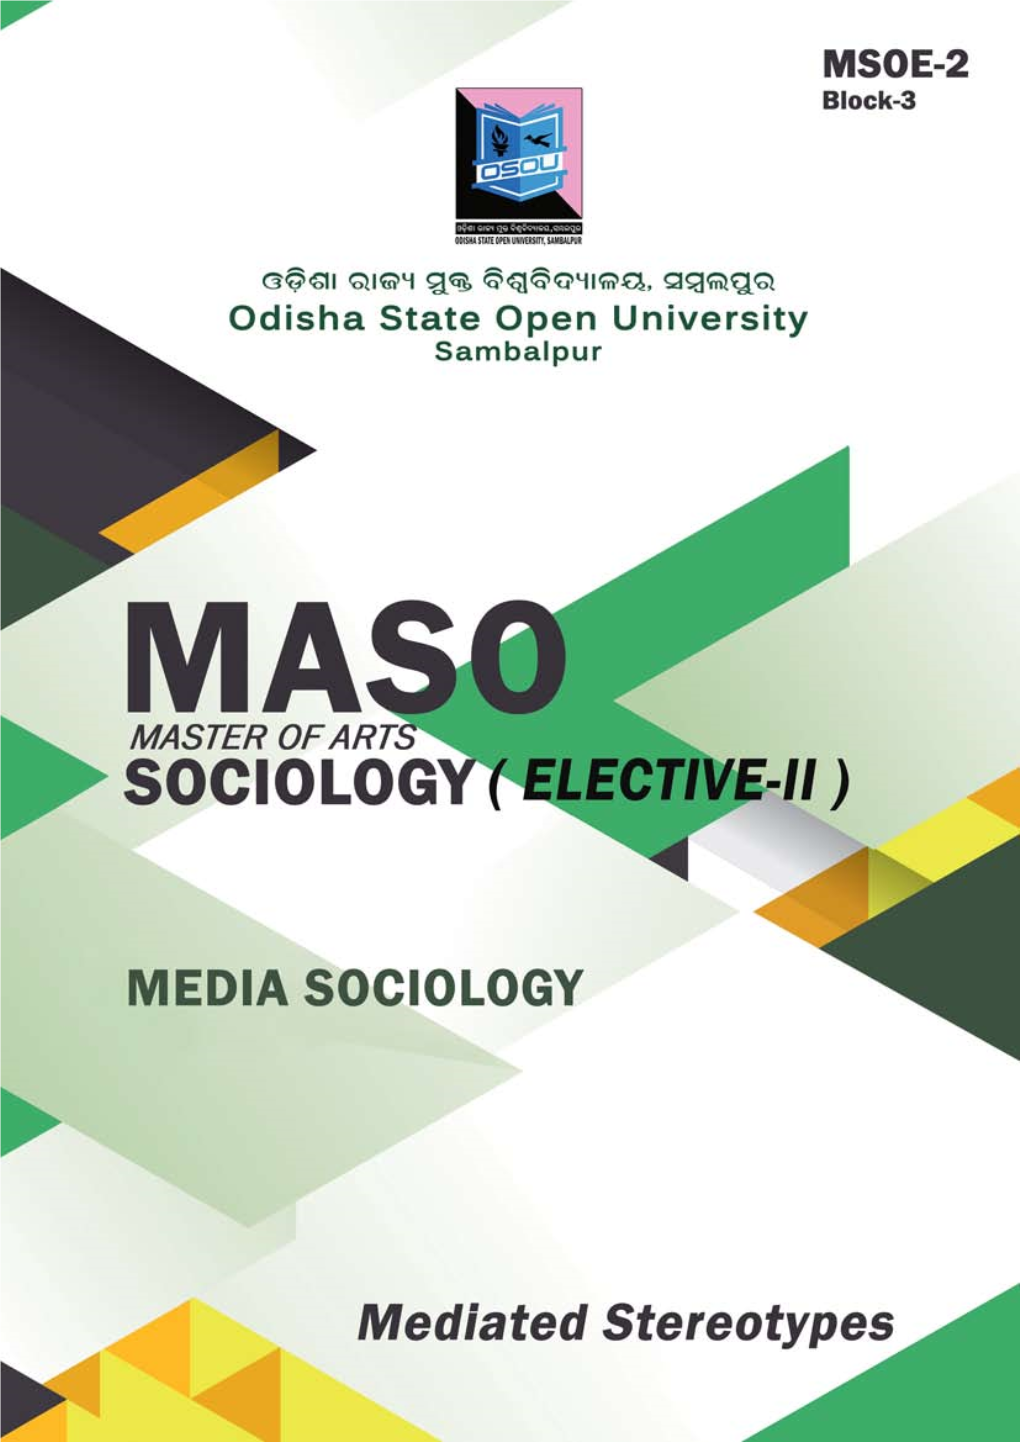 Master of Arts SOCIOLOGY (MASO) Elective-II MSOE-2